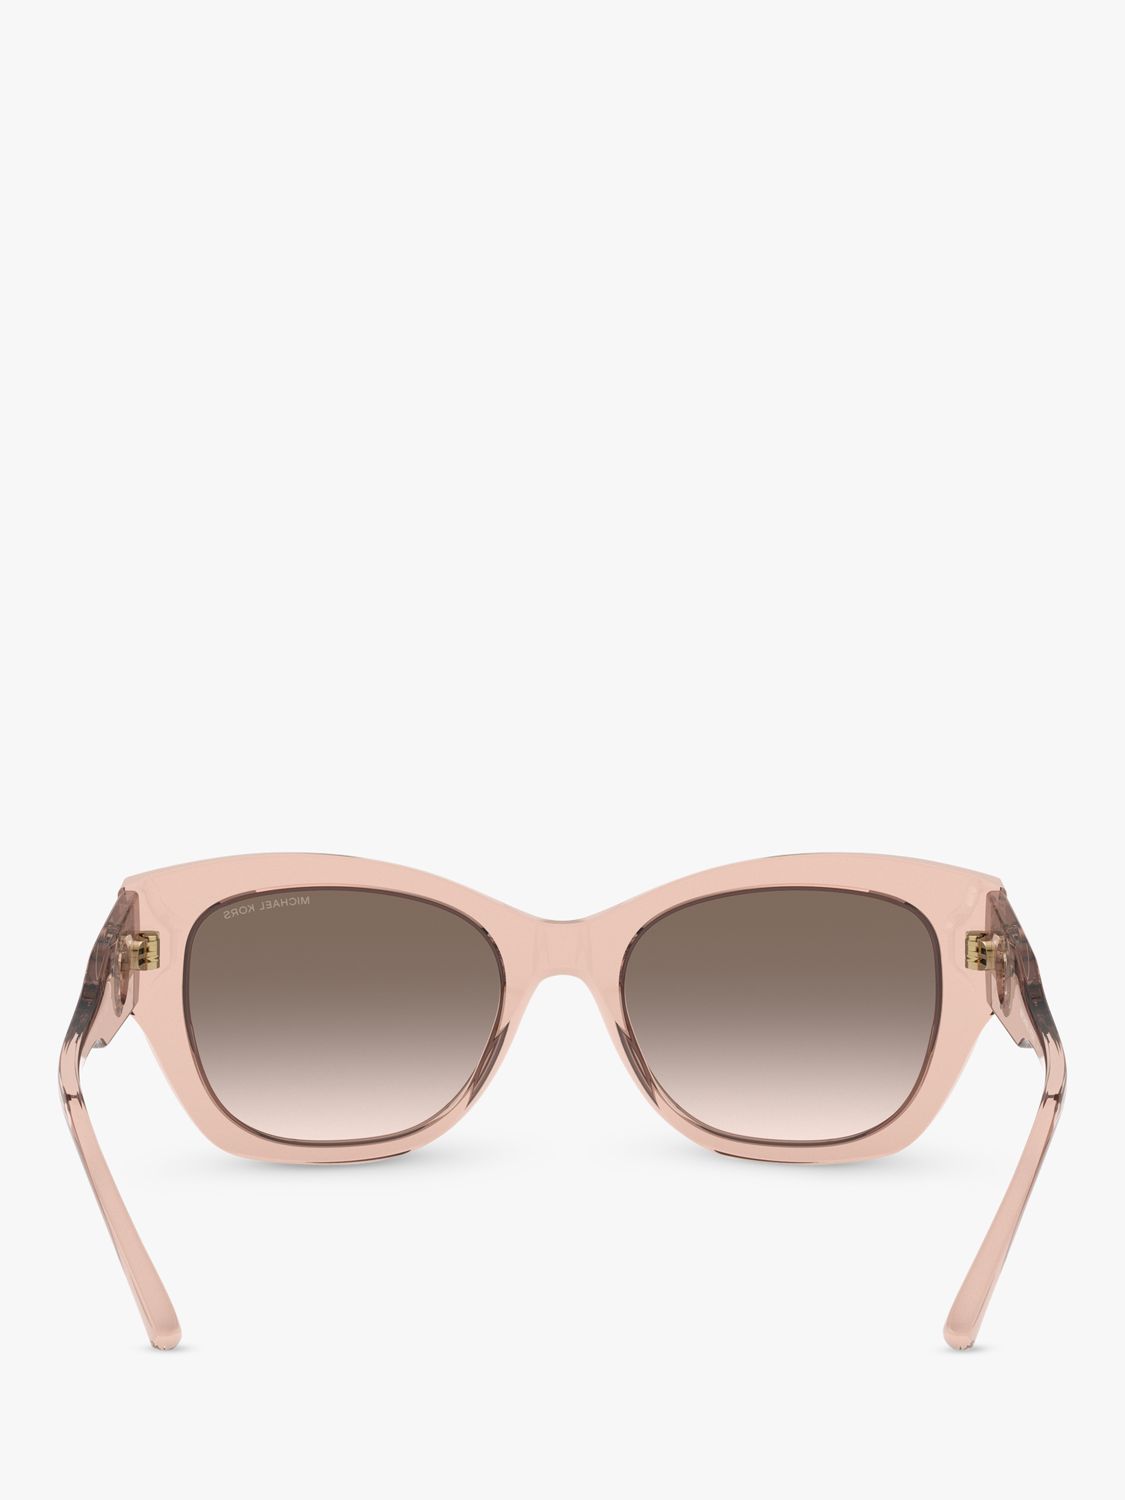 Michael Kors MK2119 Women's Palermo Square Sunglasses, Camila Rose Transparent/Brown Gradient